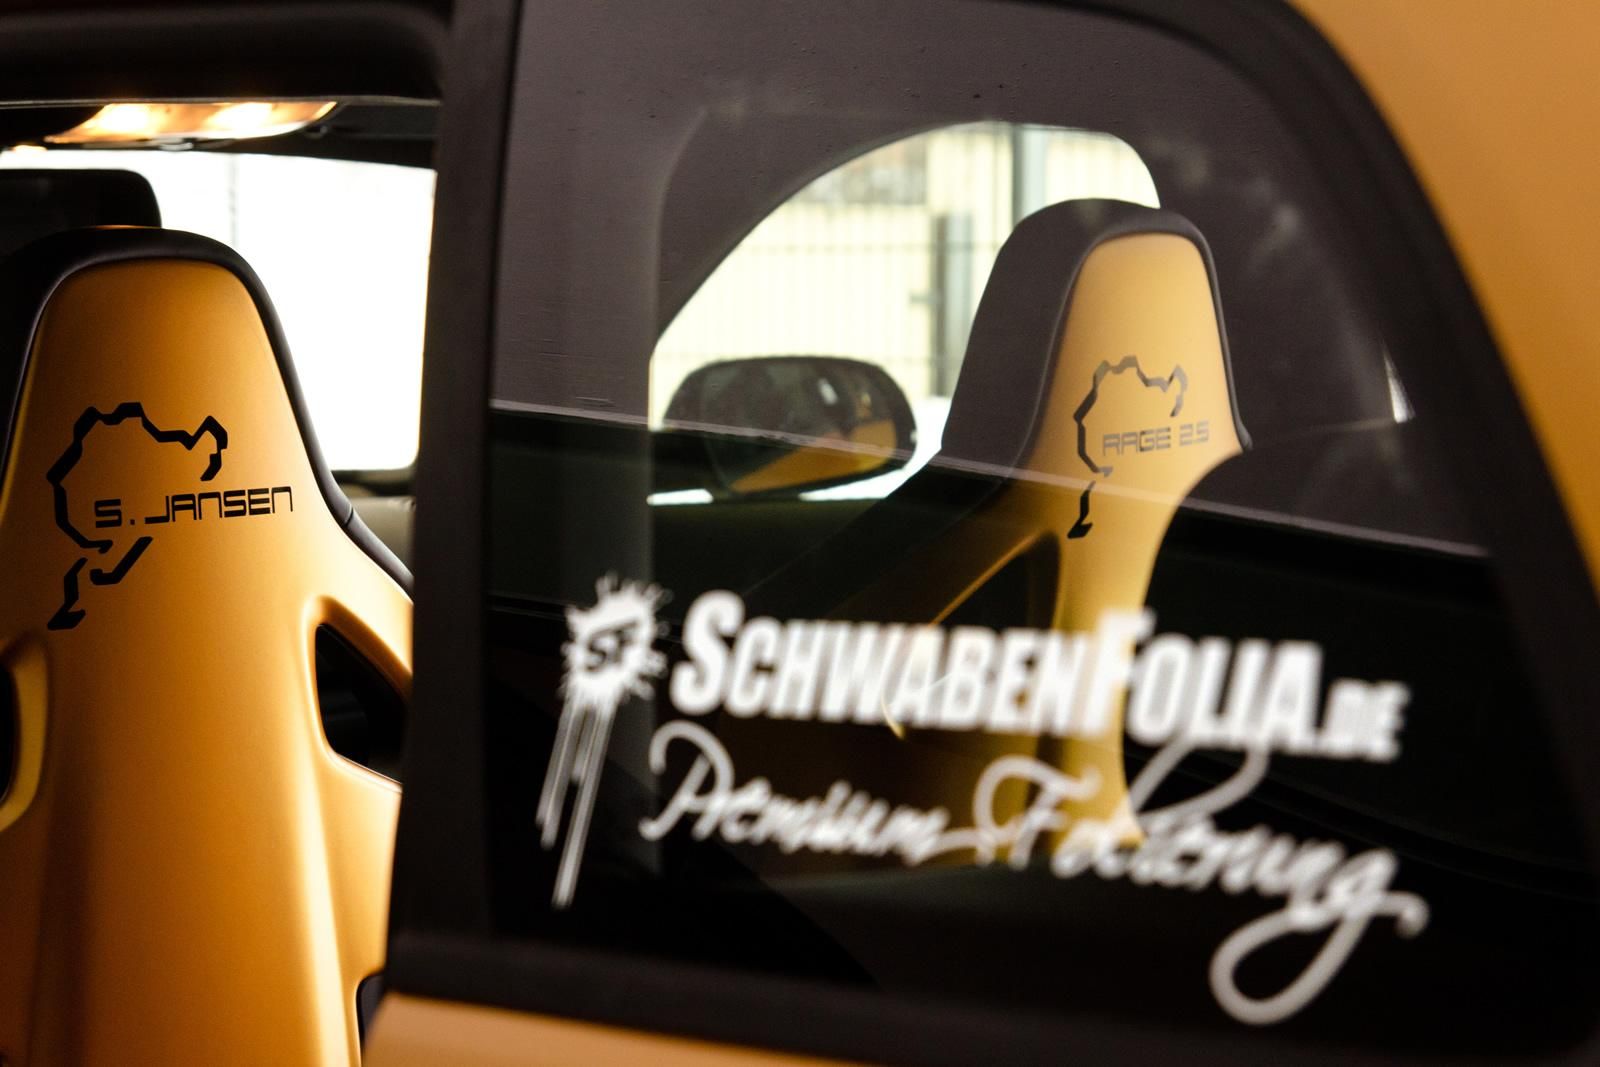 2013 Audi RS3 Sportback by Schwabenfolia